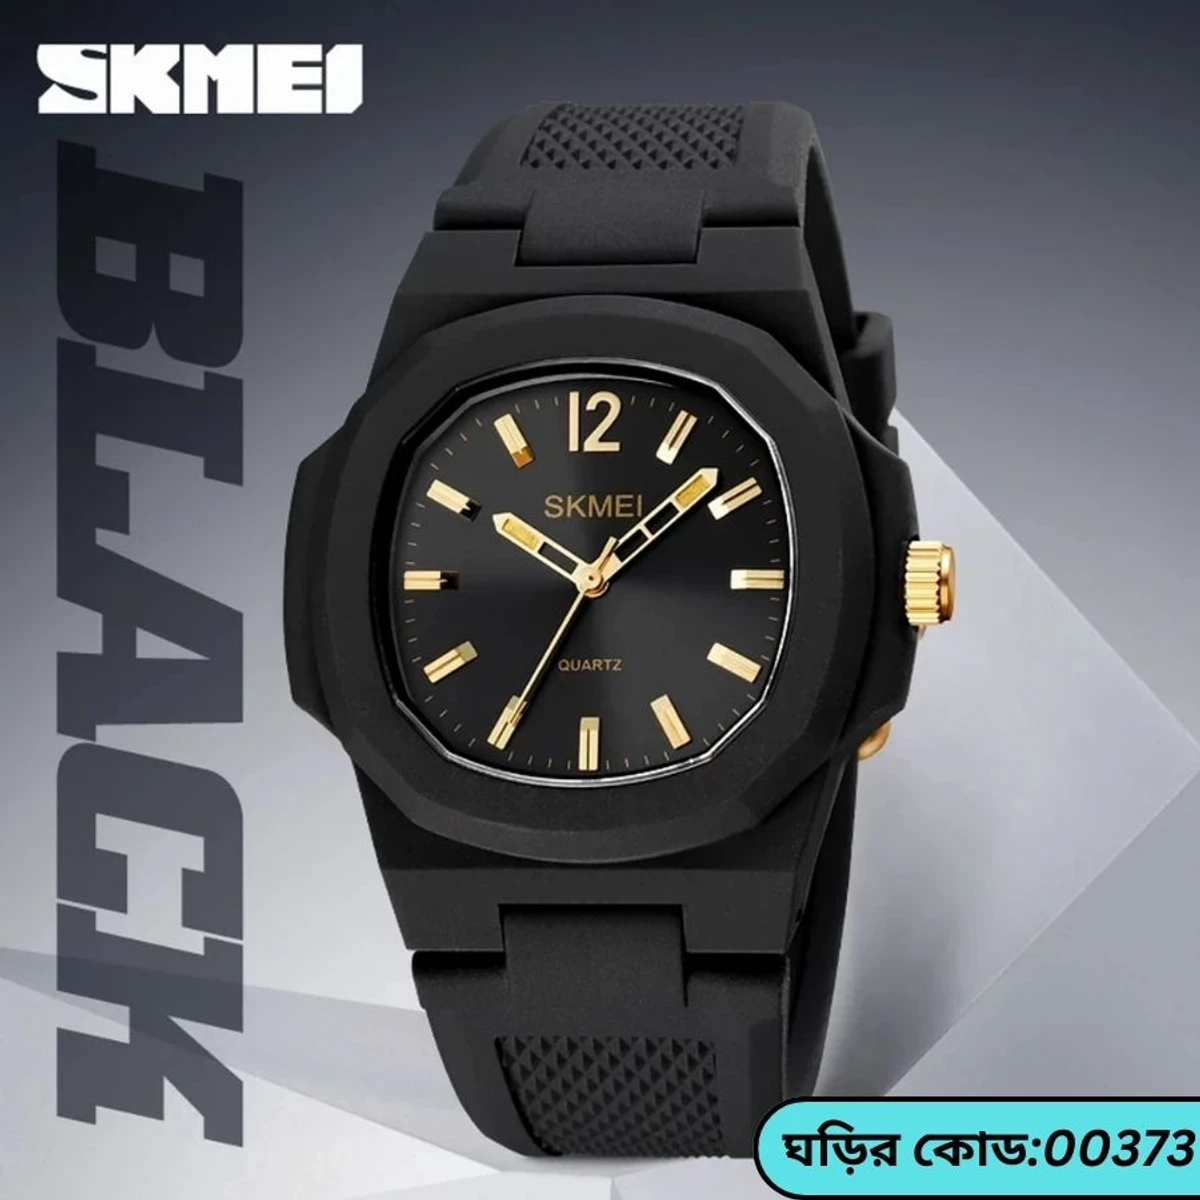 SKMEI Model 1717 Watch Retro Silicone Band Casual Analog Quartz Model 1717 skmei Cooler black or golden dial